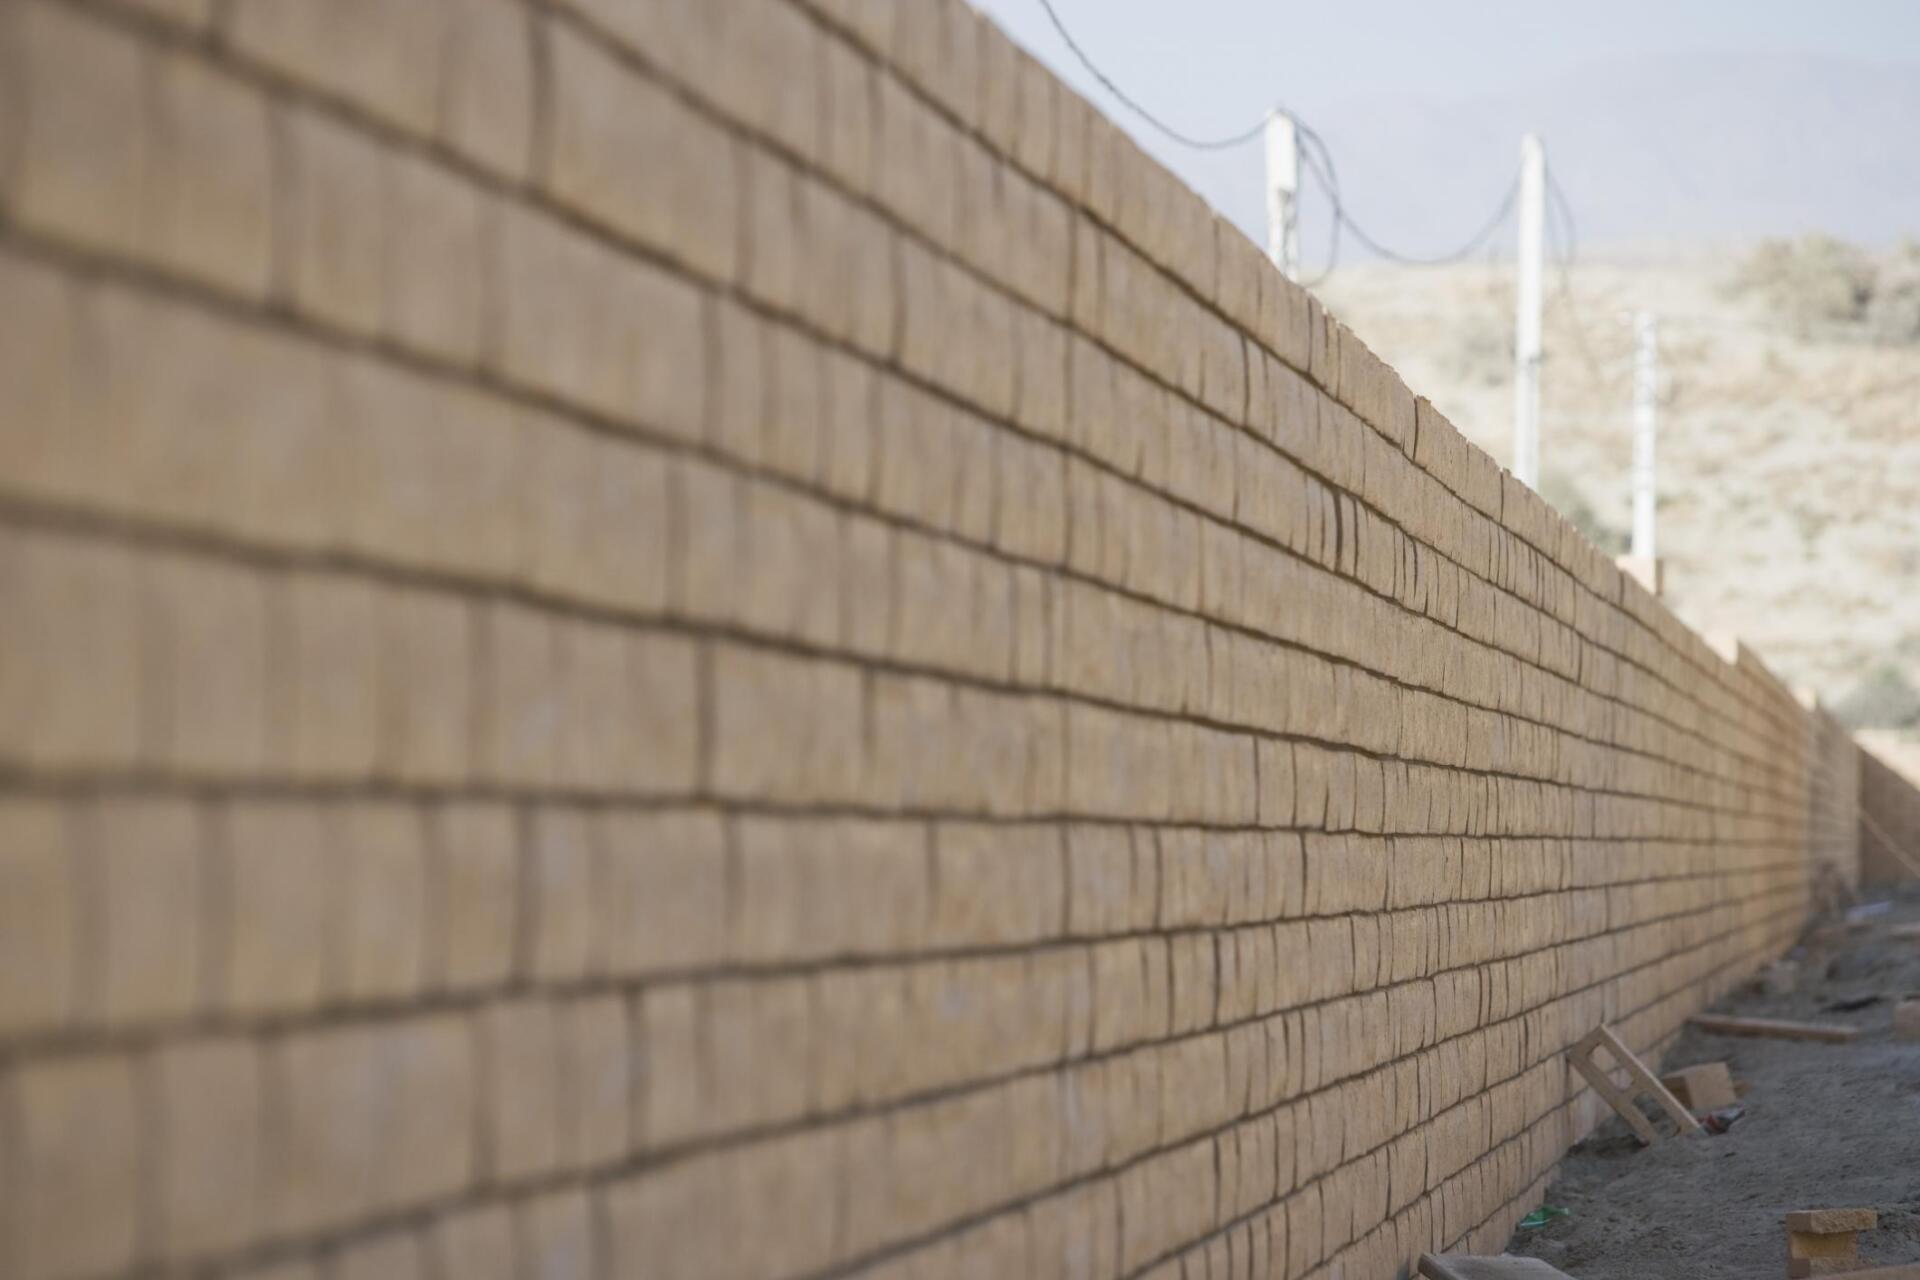 a retaining wall made of brick